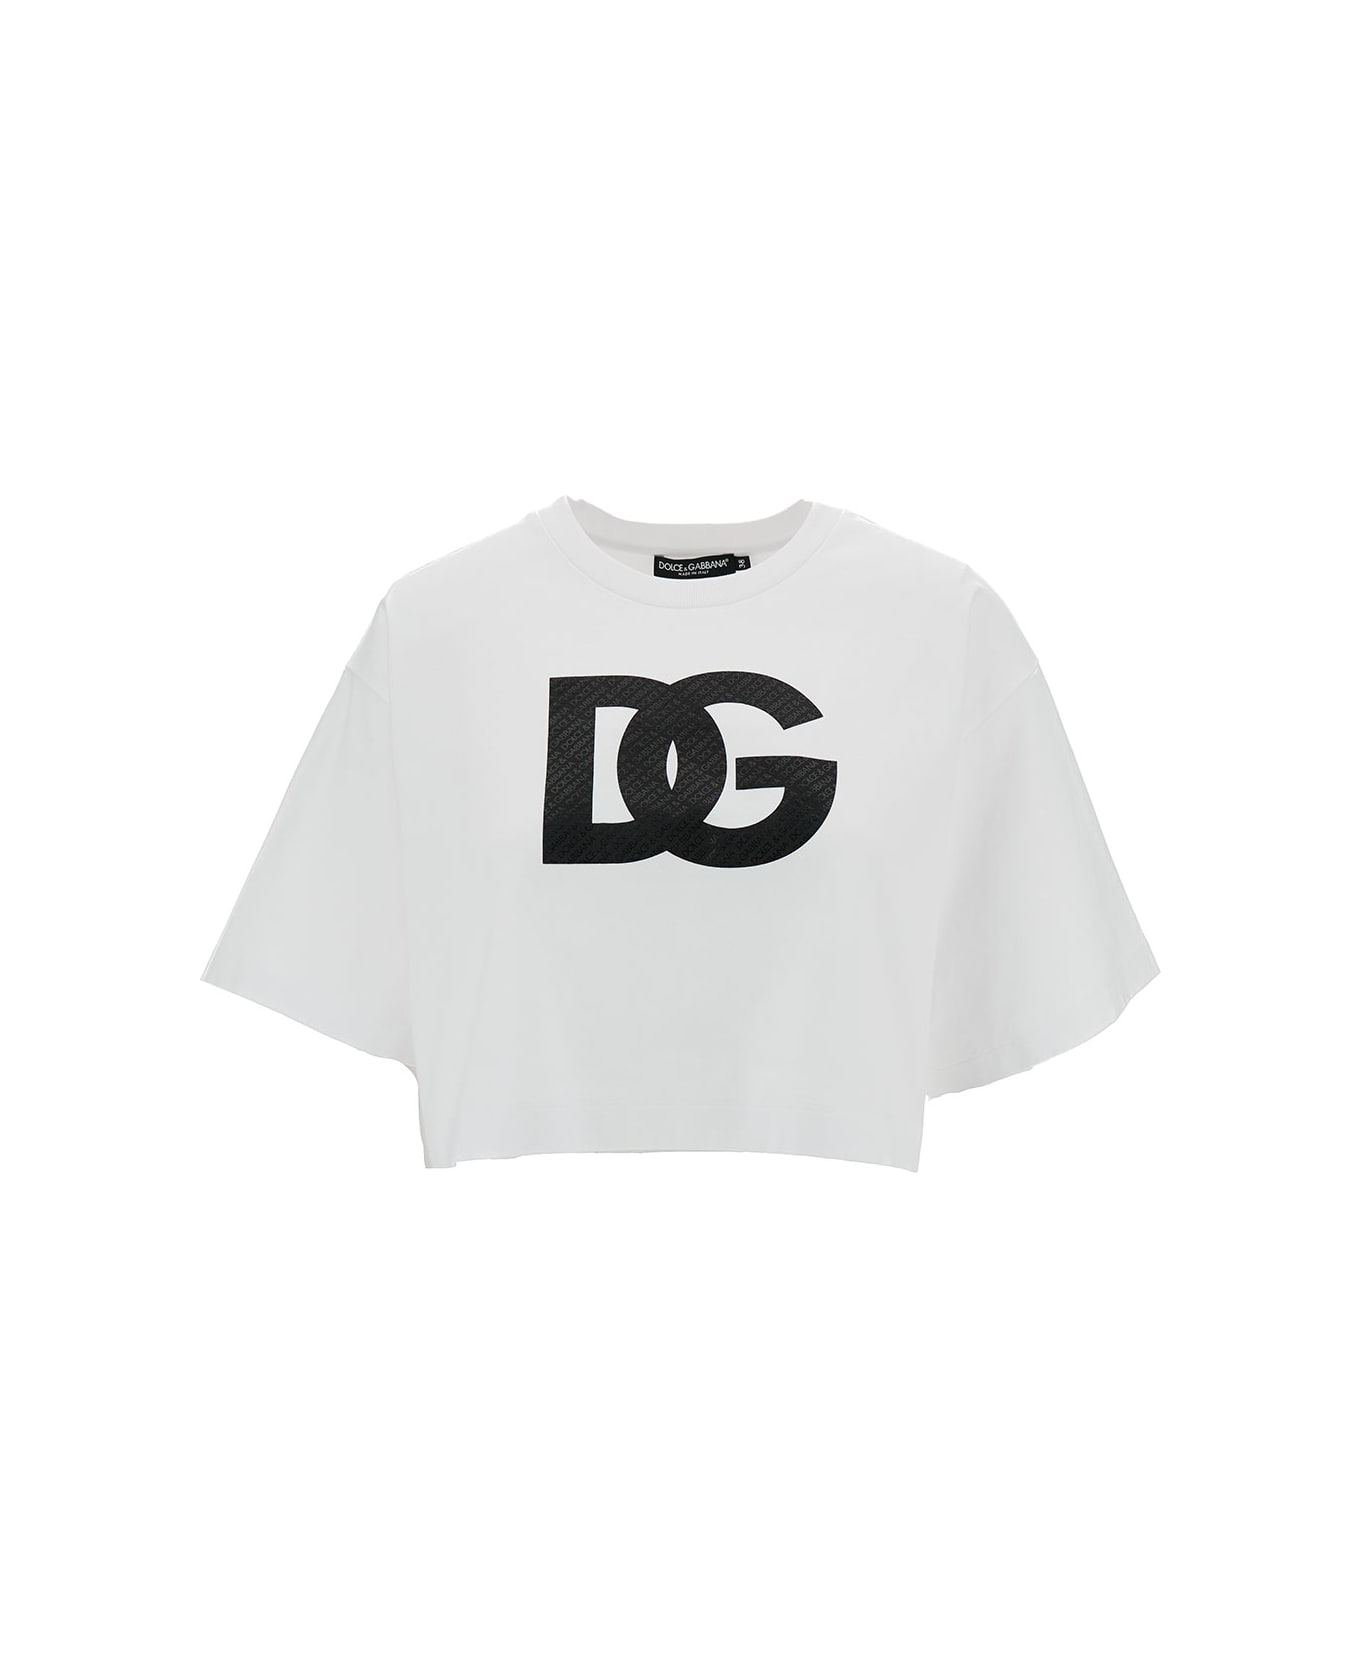 Dolce & Gabbana White Crewneck T-shirt With Dg Logo Ptint In Cotton Woman - White Tシャツ